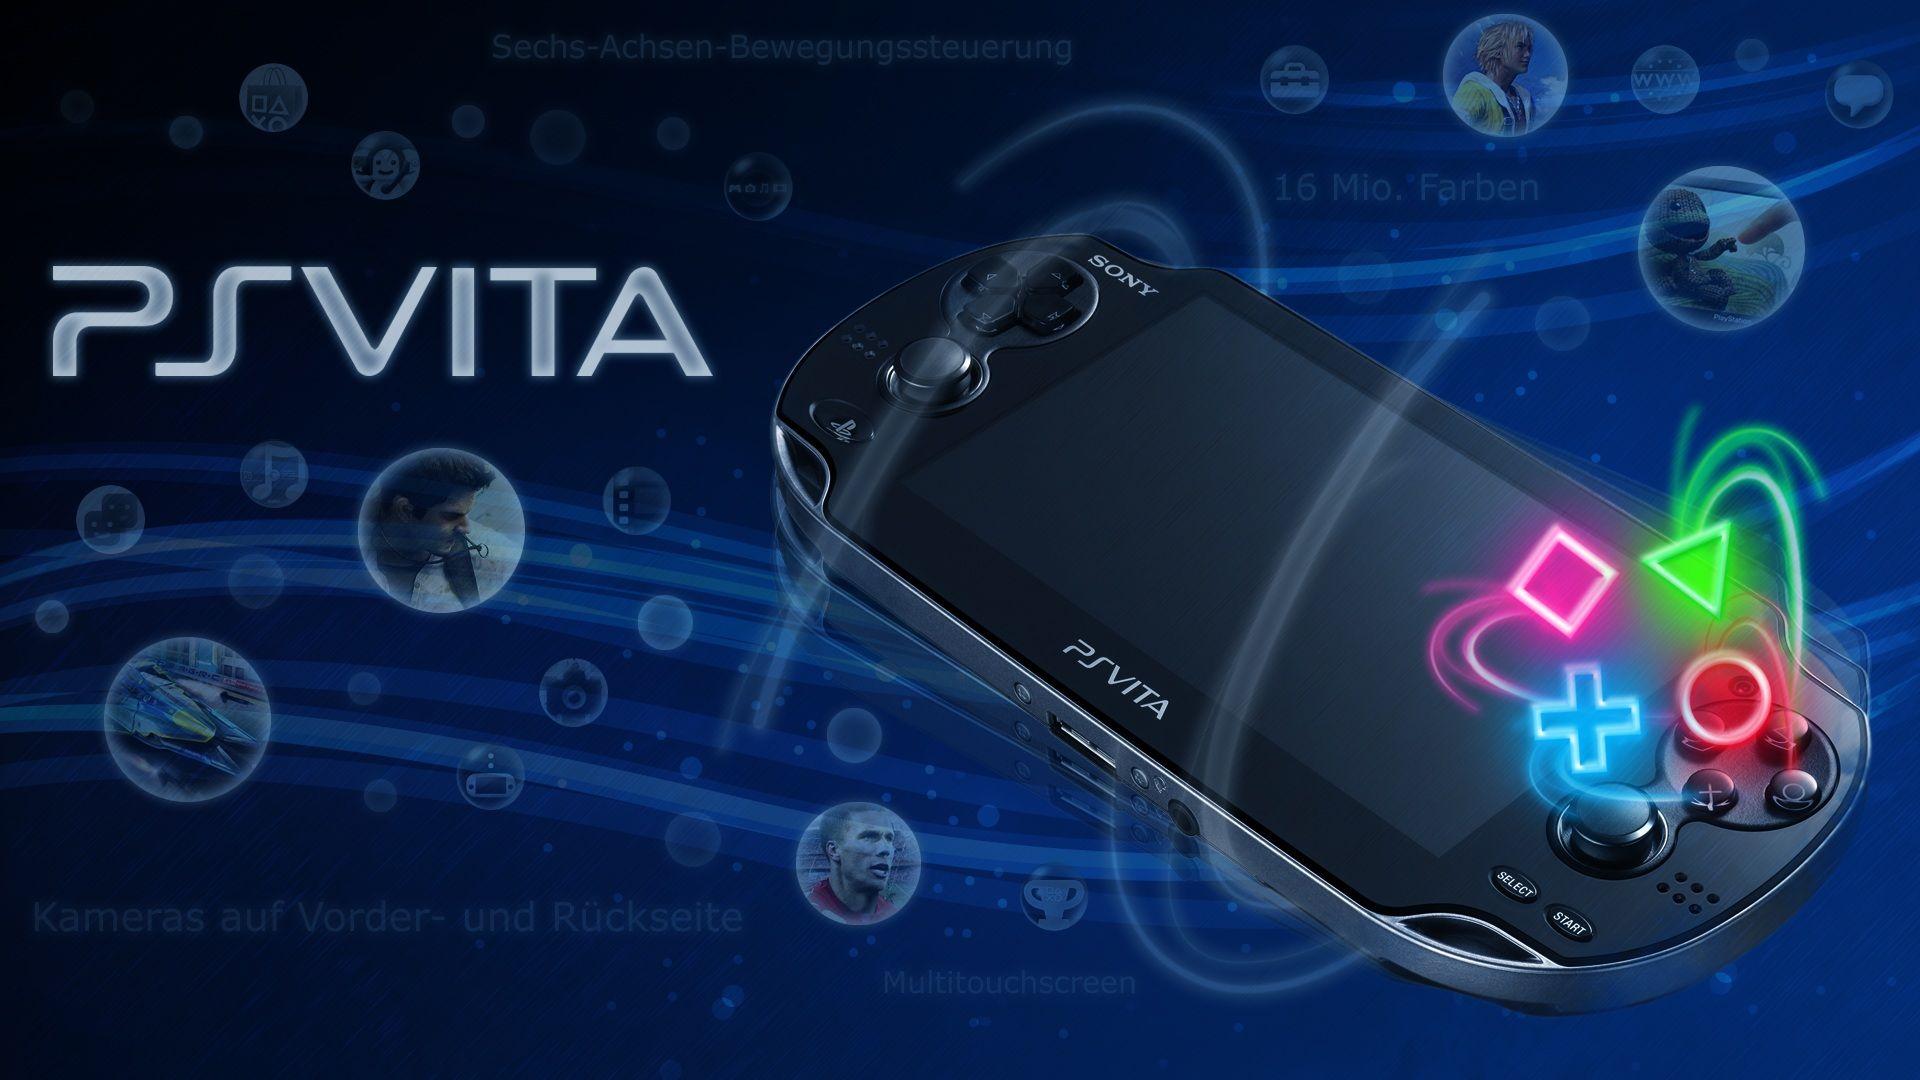 HD PS Vita Wallpaper